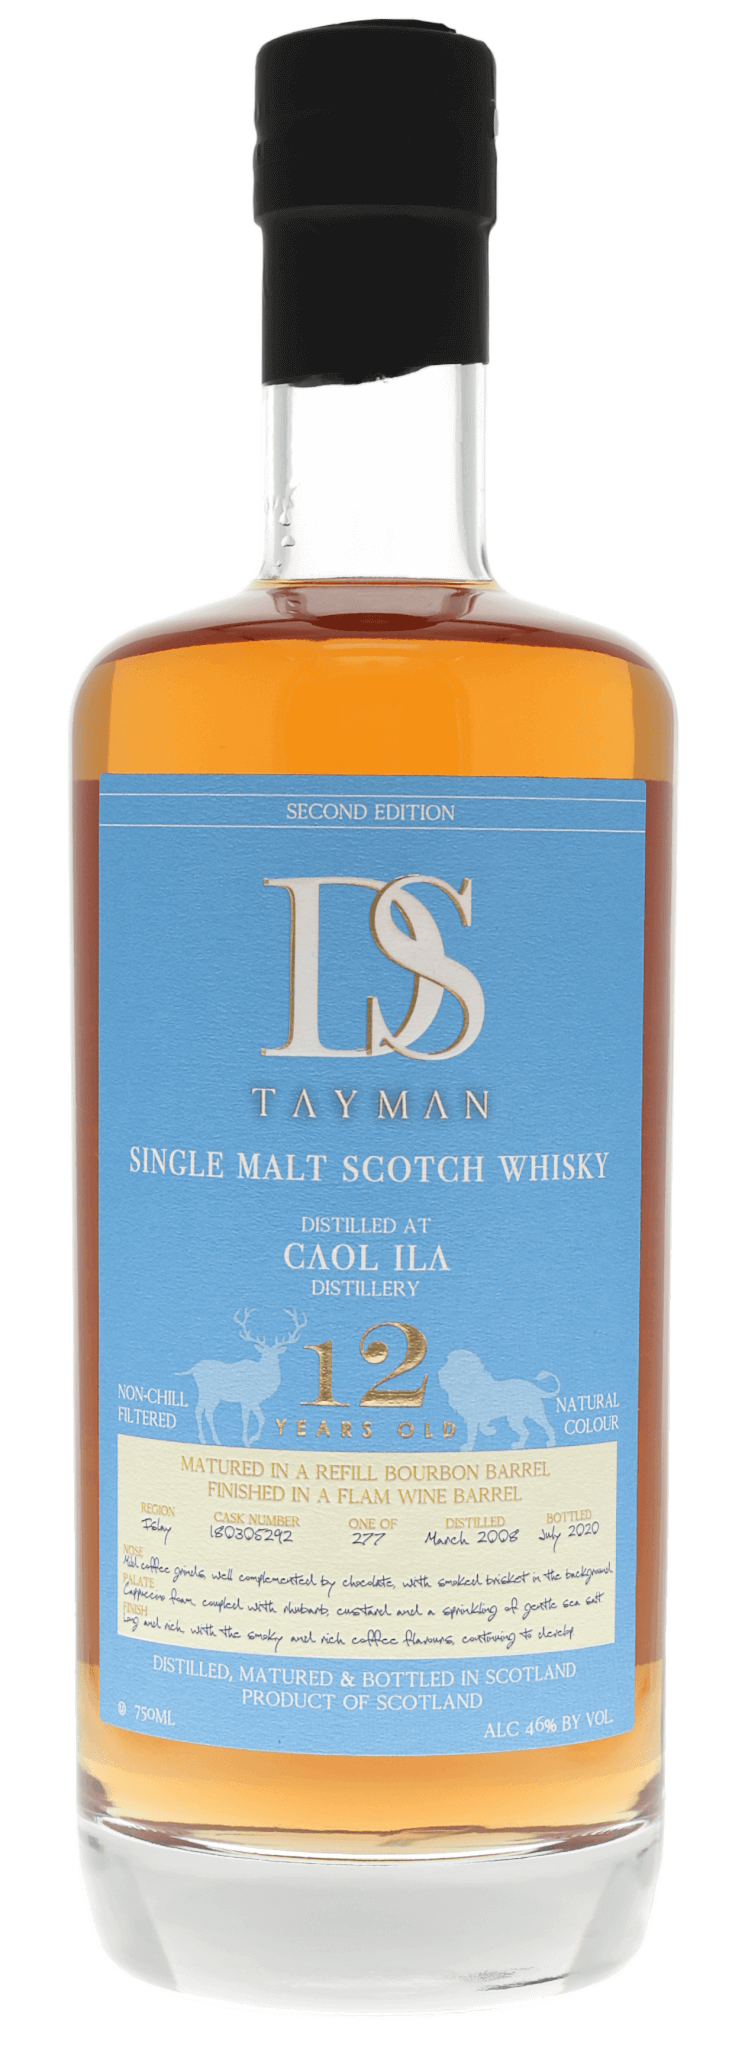 DS Tayman Single Malt Scotch Whisky Caol Ila 12 Years Old